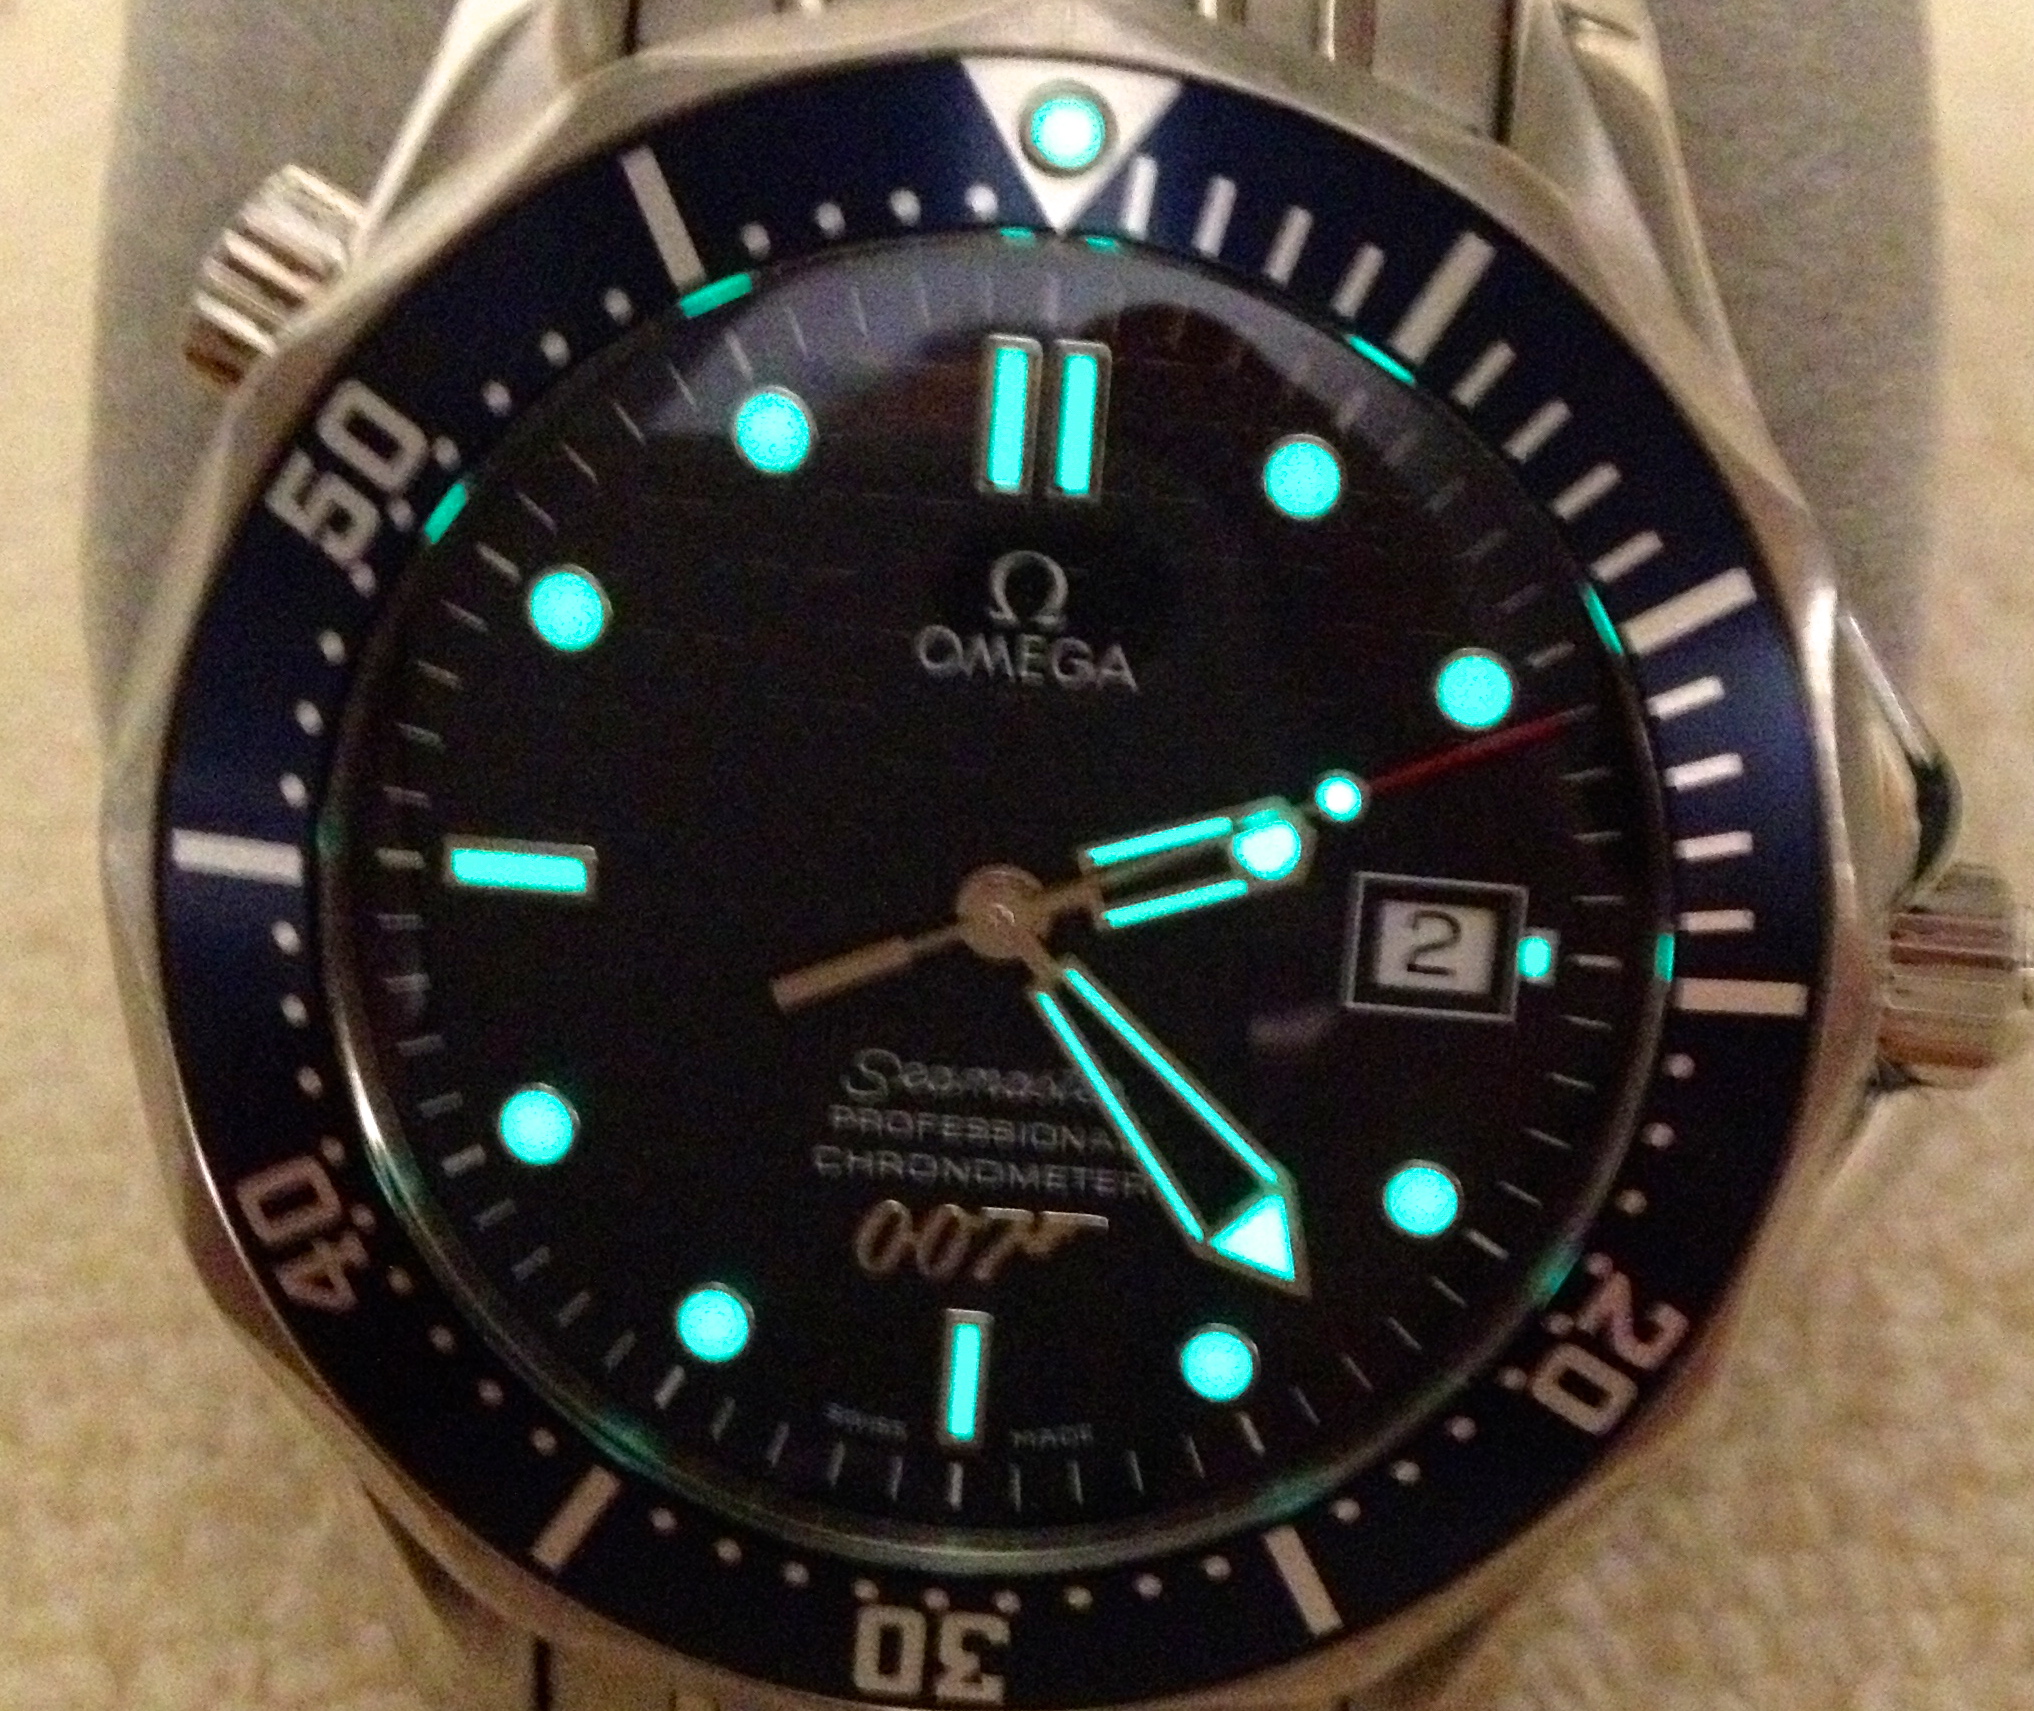 omega 007 40th anniversary watch